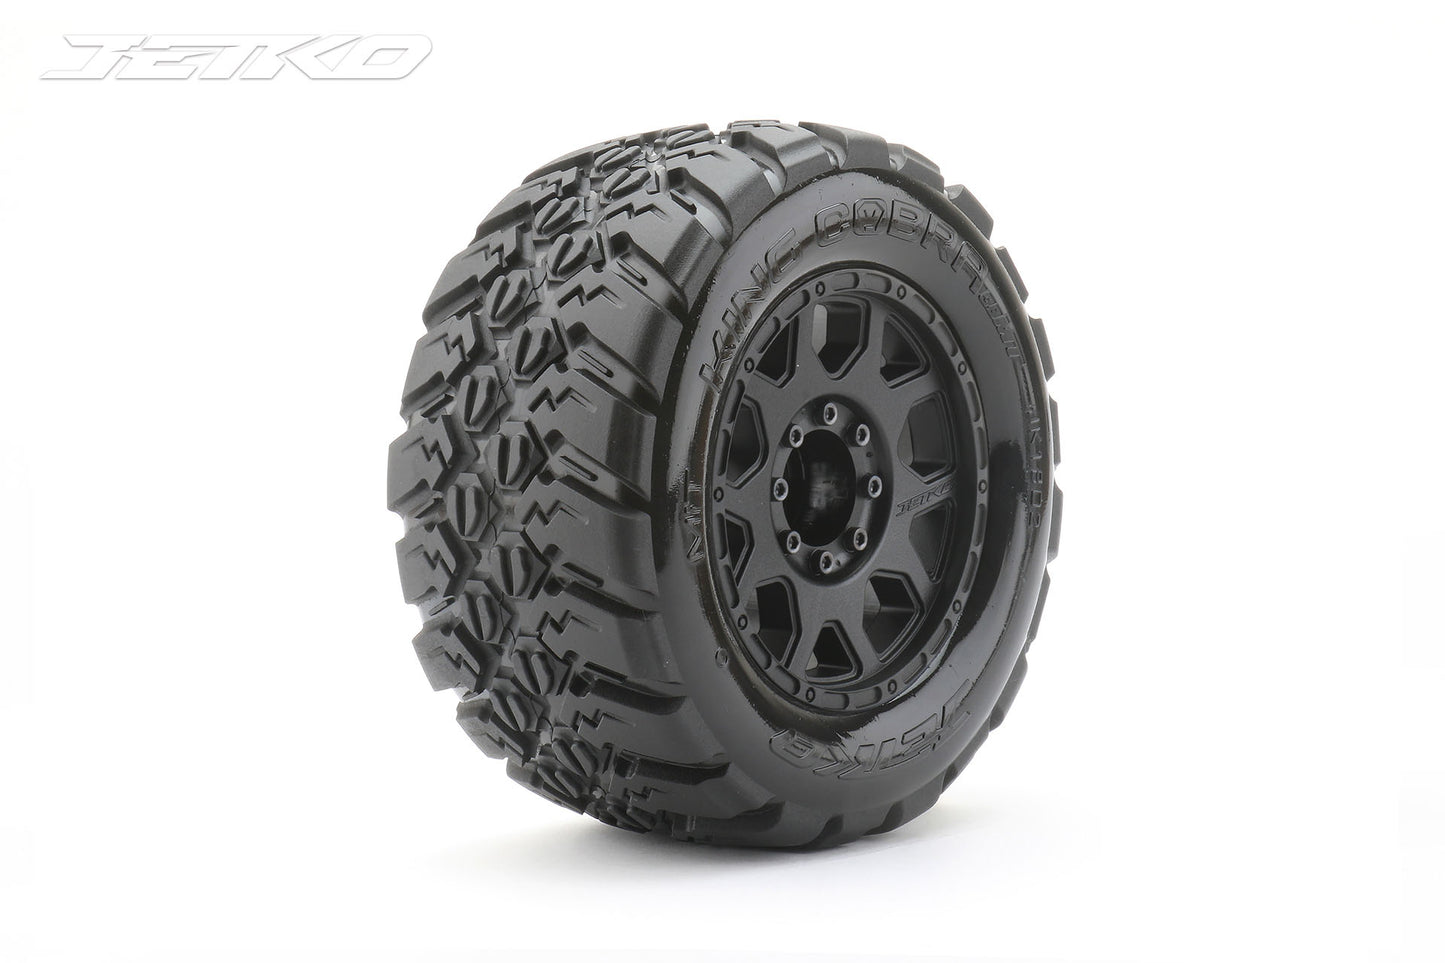 1/8 MT 3.8 King Cobra Tires Mounted on Black Claw Rims, Medium Soft, Belted, 17mm 1/2" Offset (2)